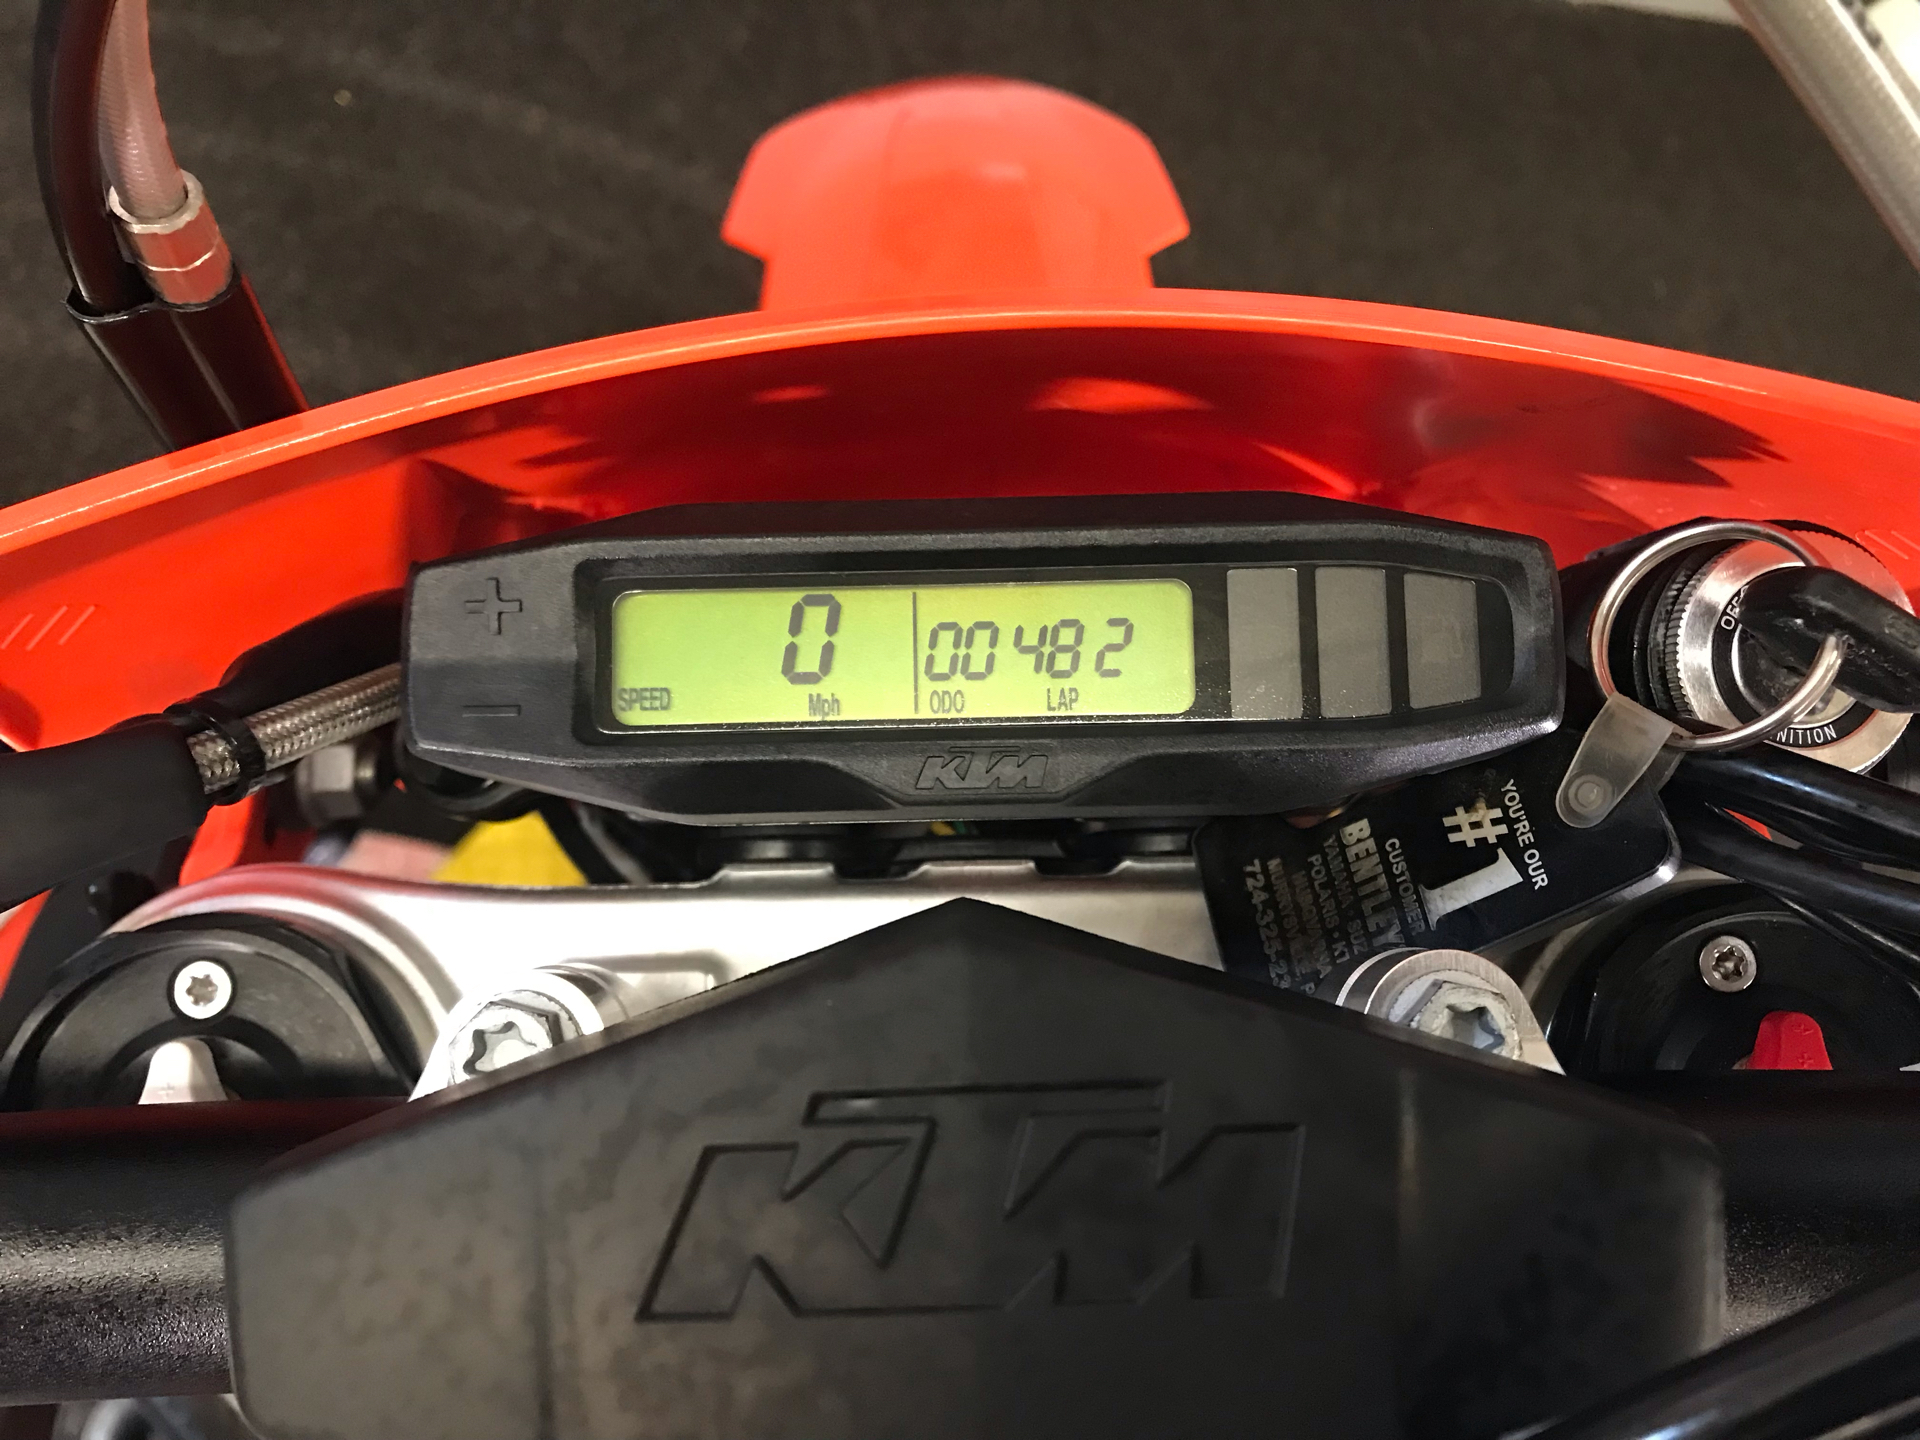 2018 KTM 250 EXC-F in Tyrone, Pennsylvania - Photo 14